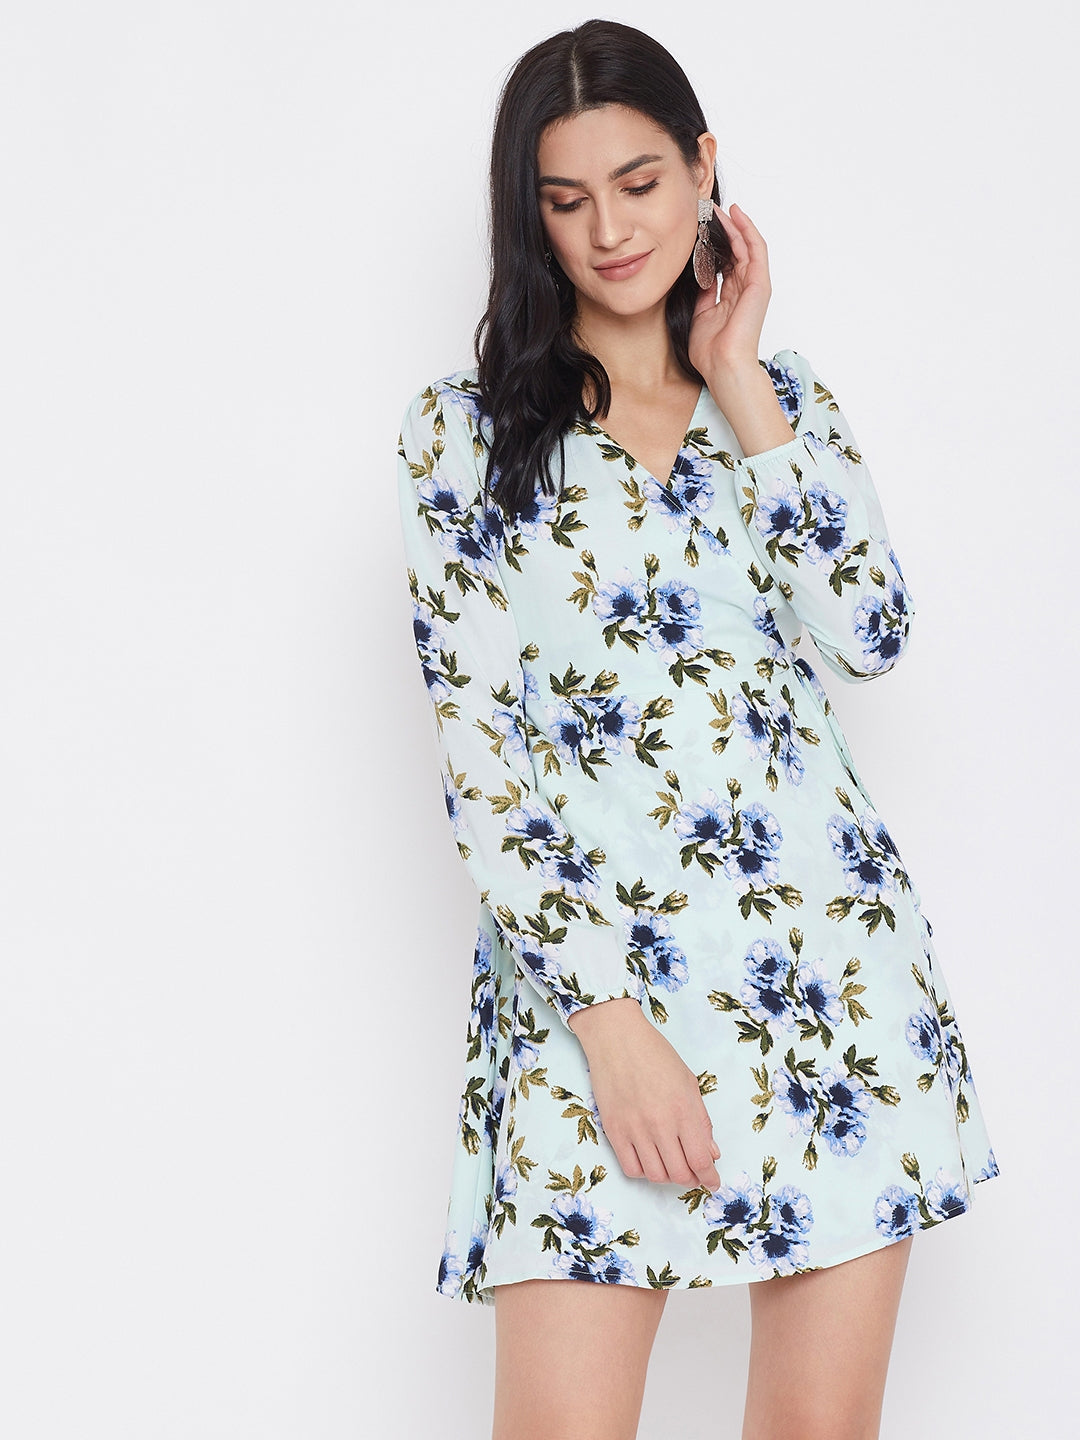 Paige Womens Blue S Tea-Length Floral Flare Dress Print Fit レディース 